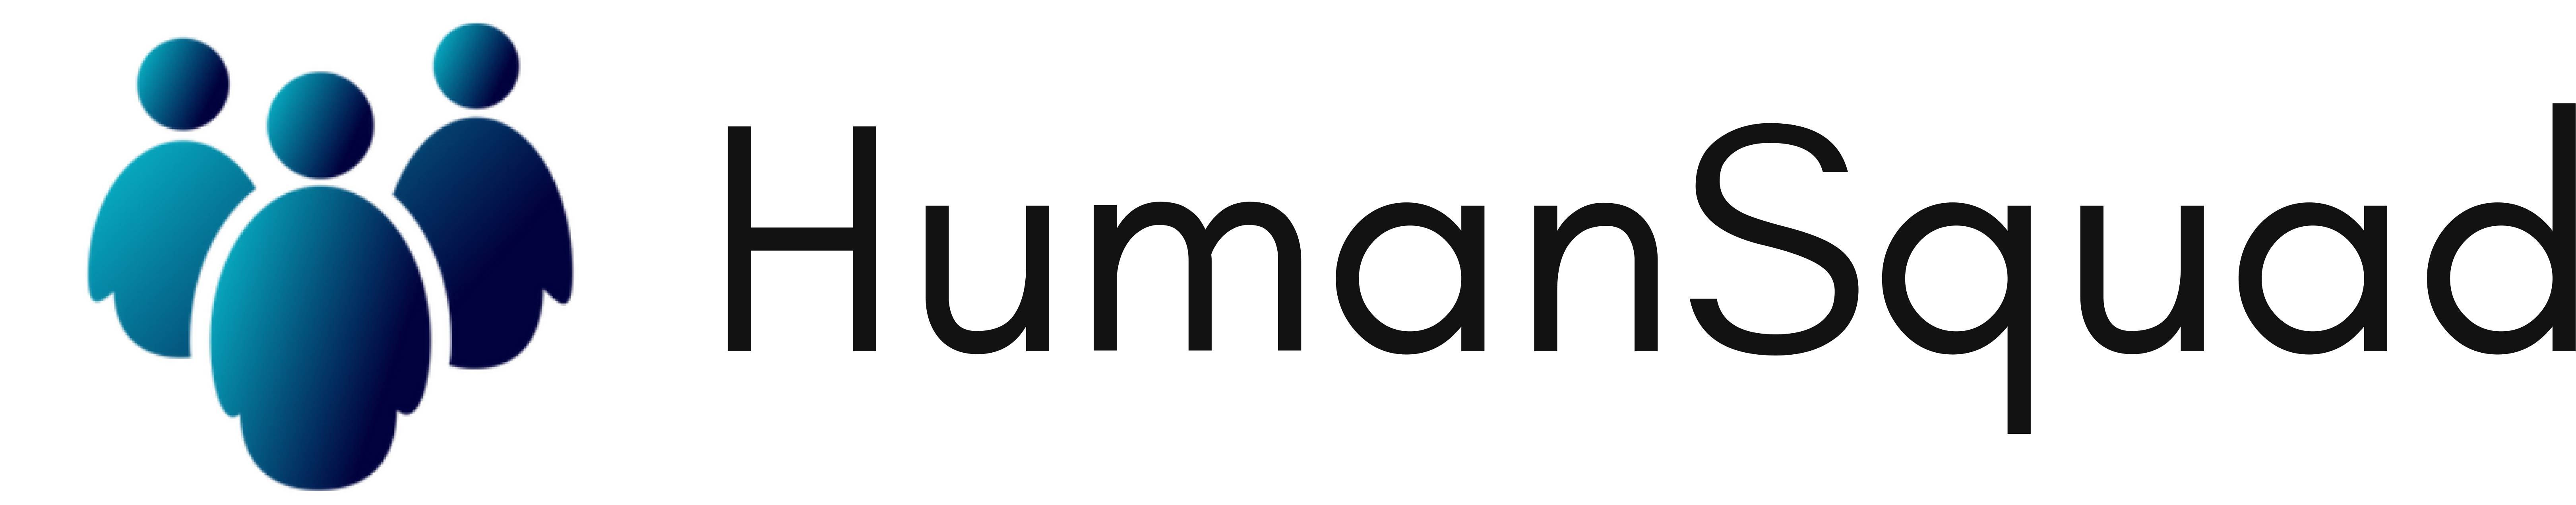 HumanSquad logo